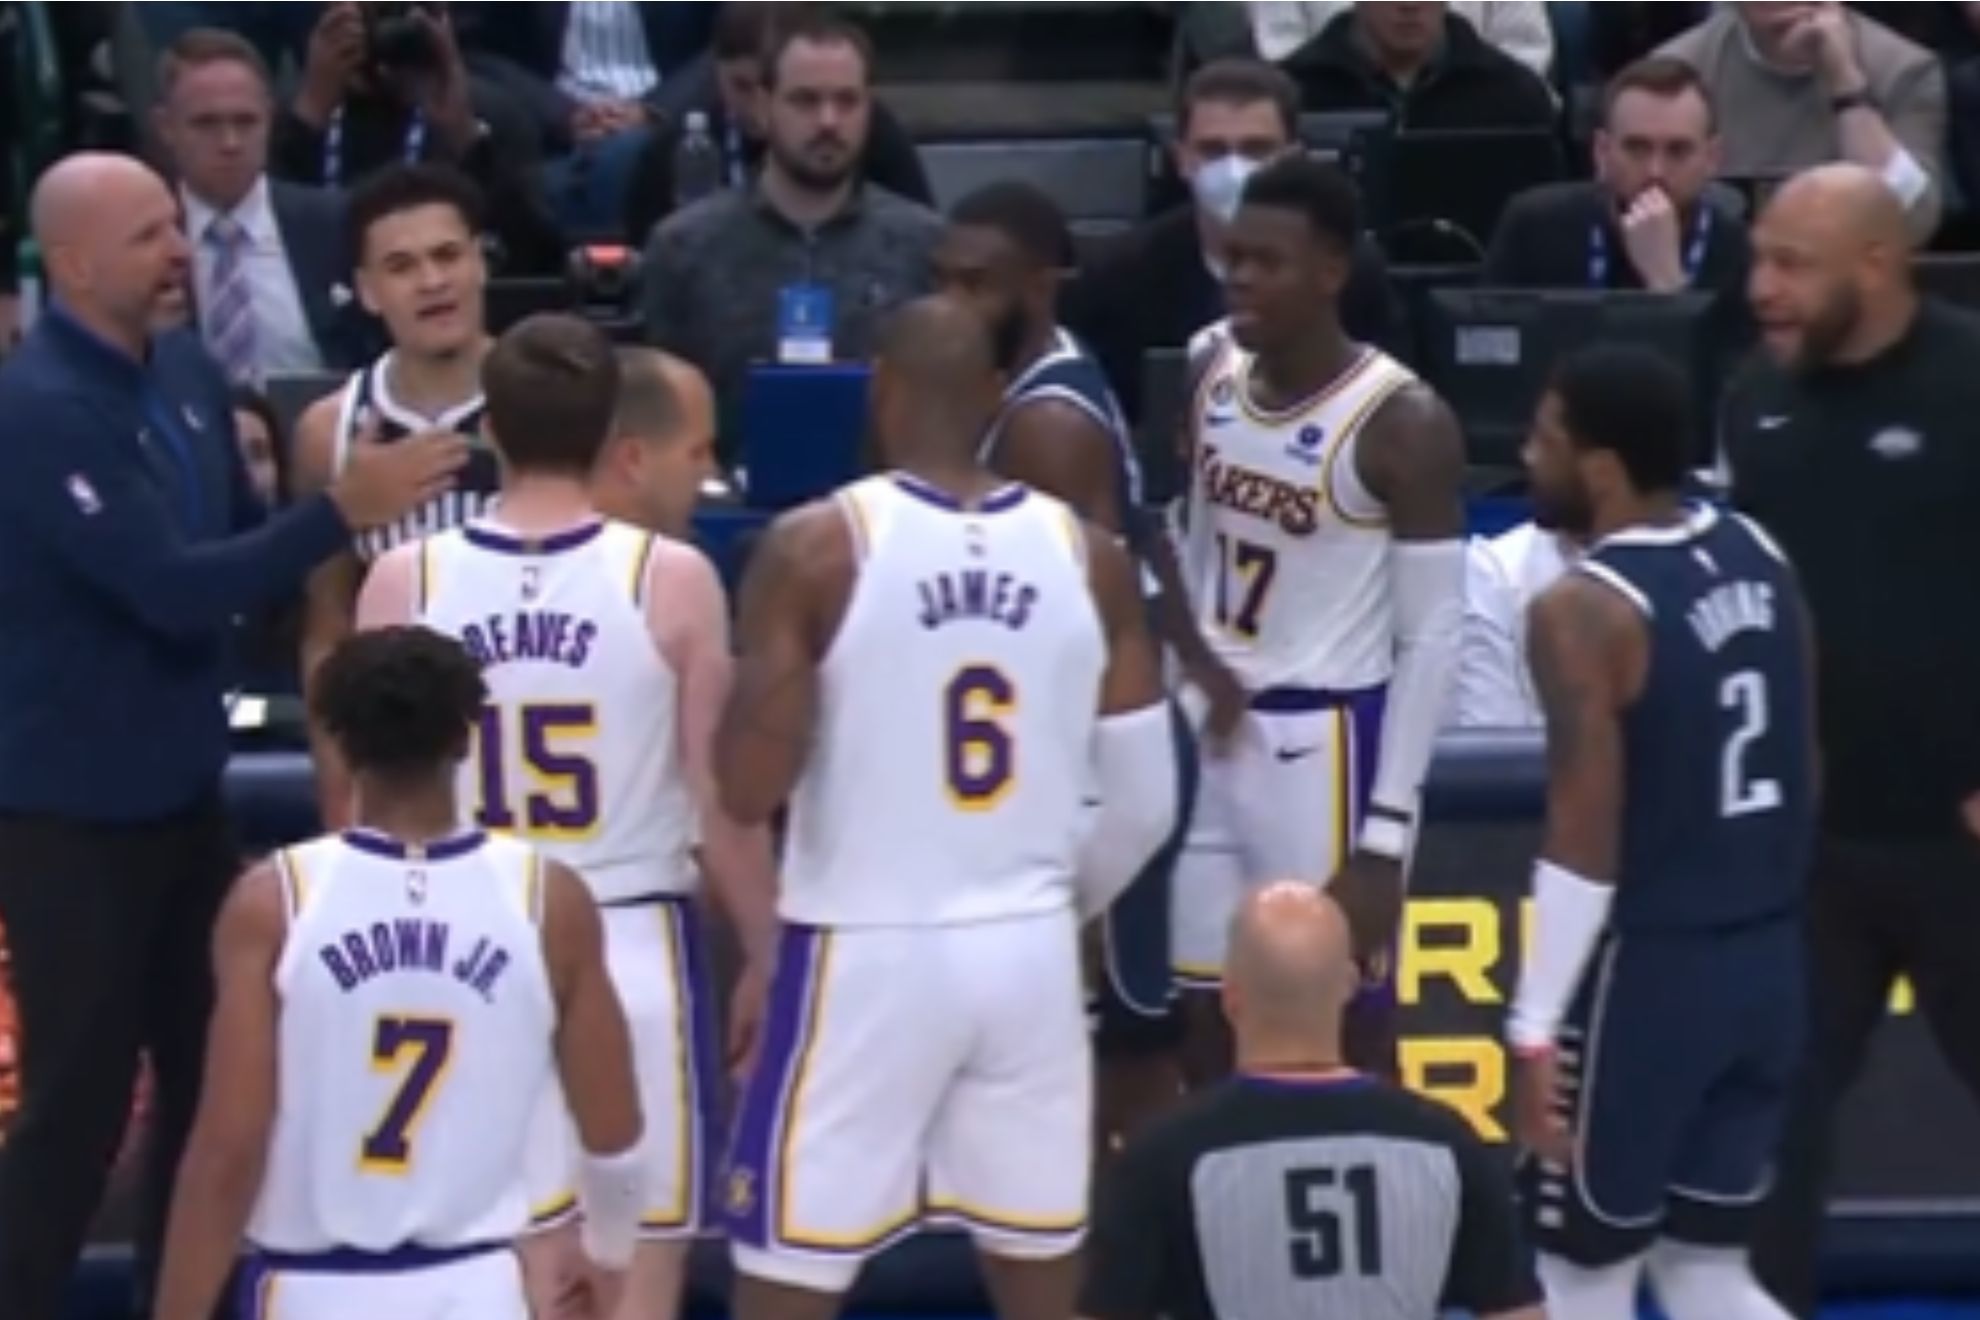 Lakers guard Austin Reaves and Mavericks' Josh Green broken up by coaches